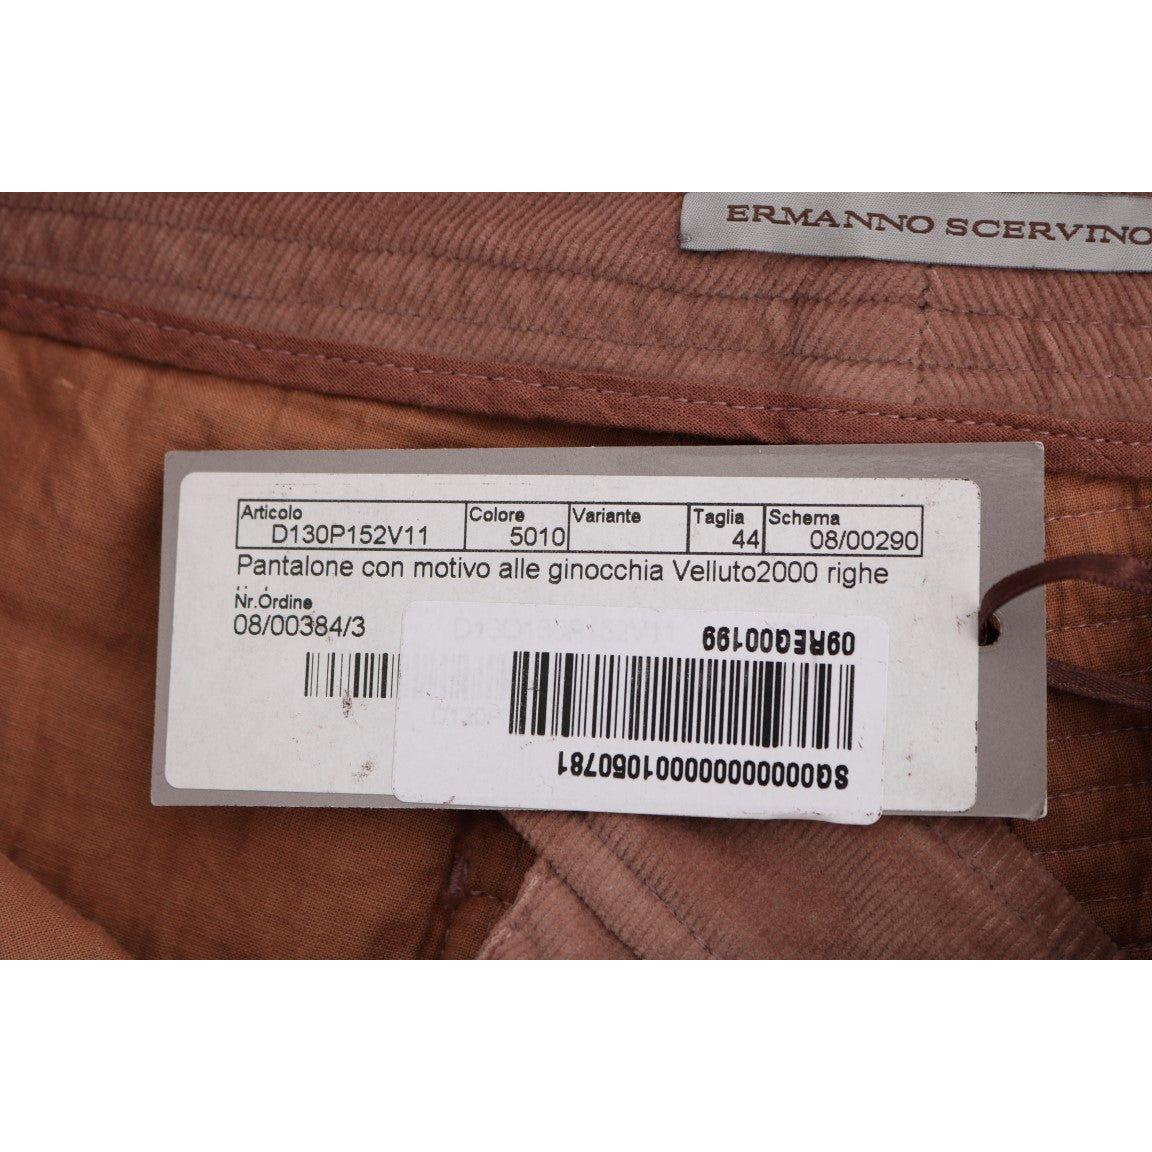 Ermanno Scervino Chic Brown Capri Cropped Pants for Elegant Evenings pink-velvet-cropped-casual-pants 449249-pink-velvet-cropped-casual-pants-5.jpg